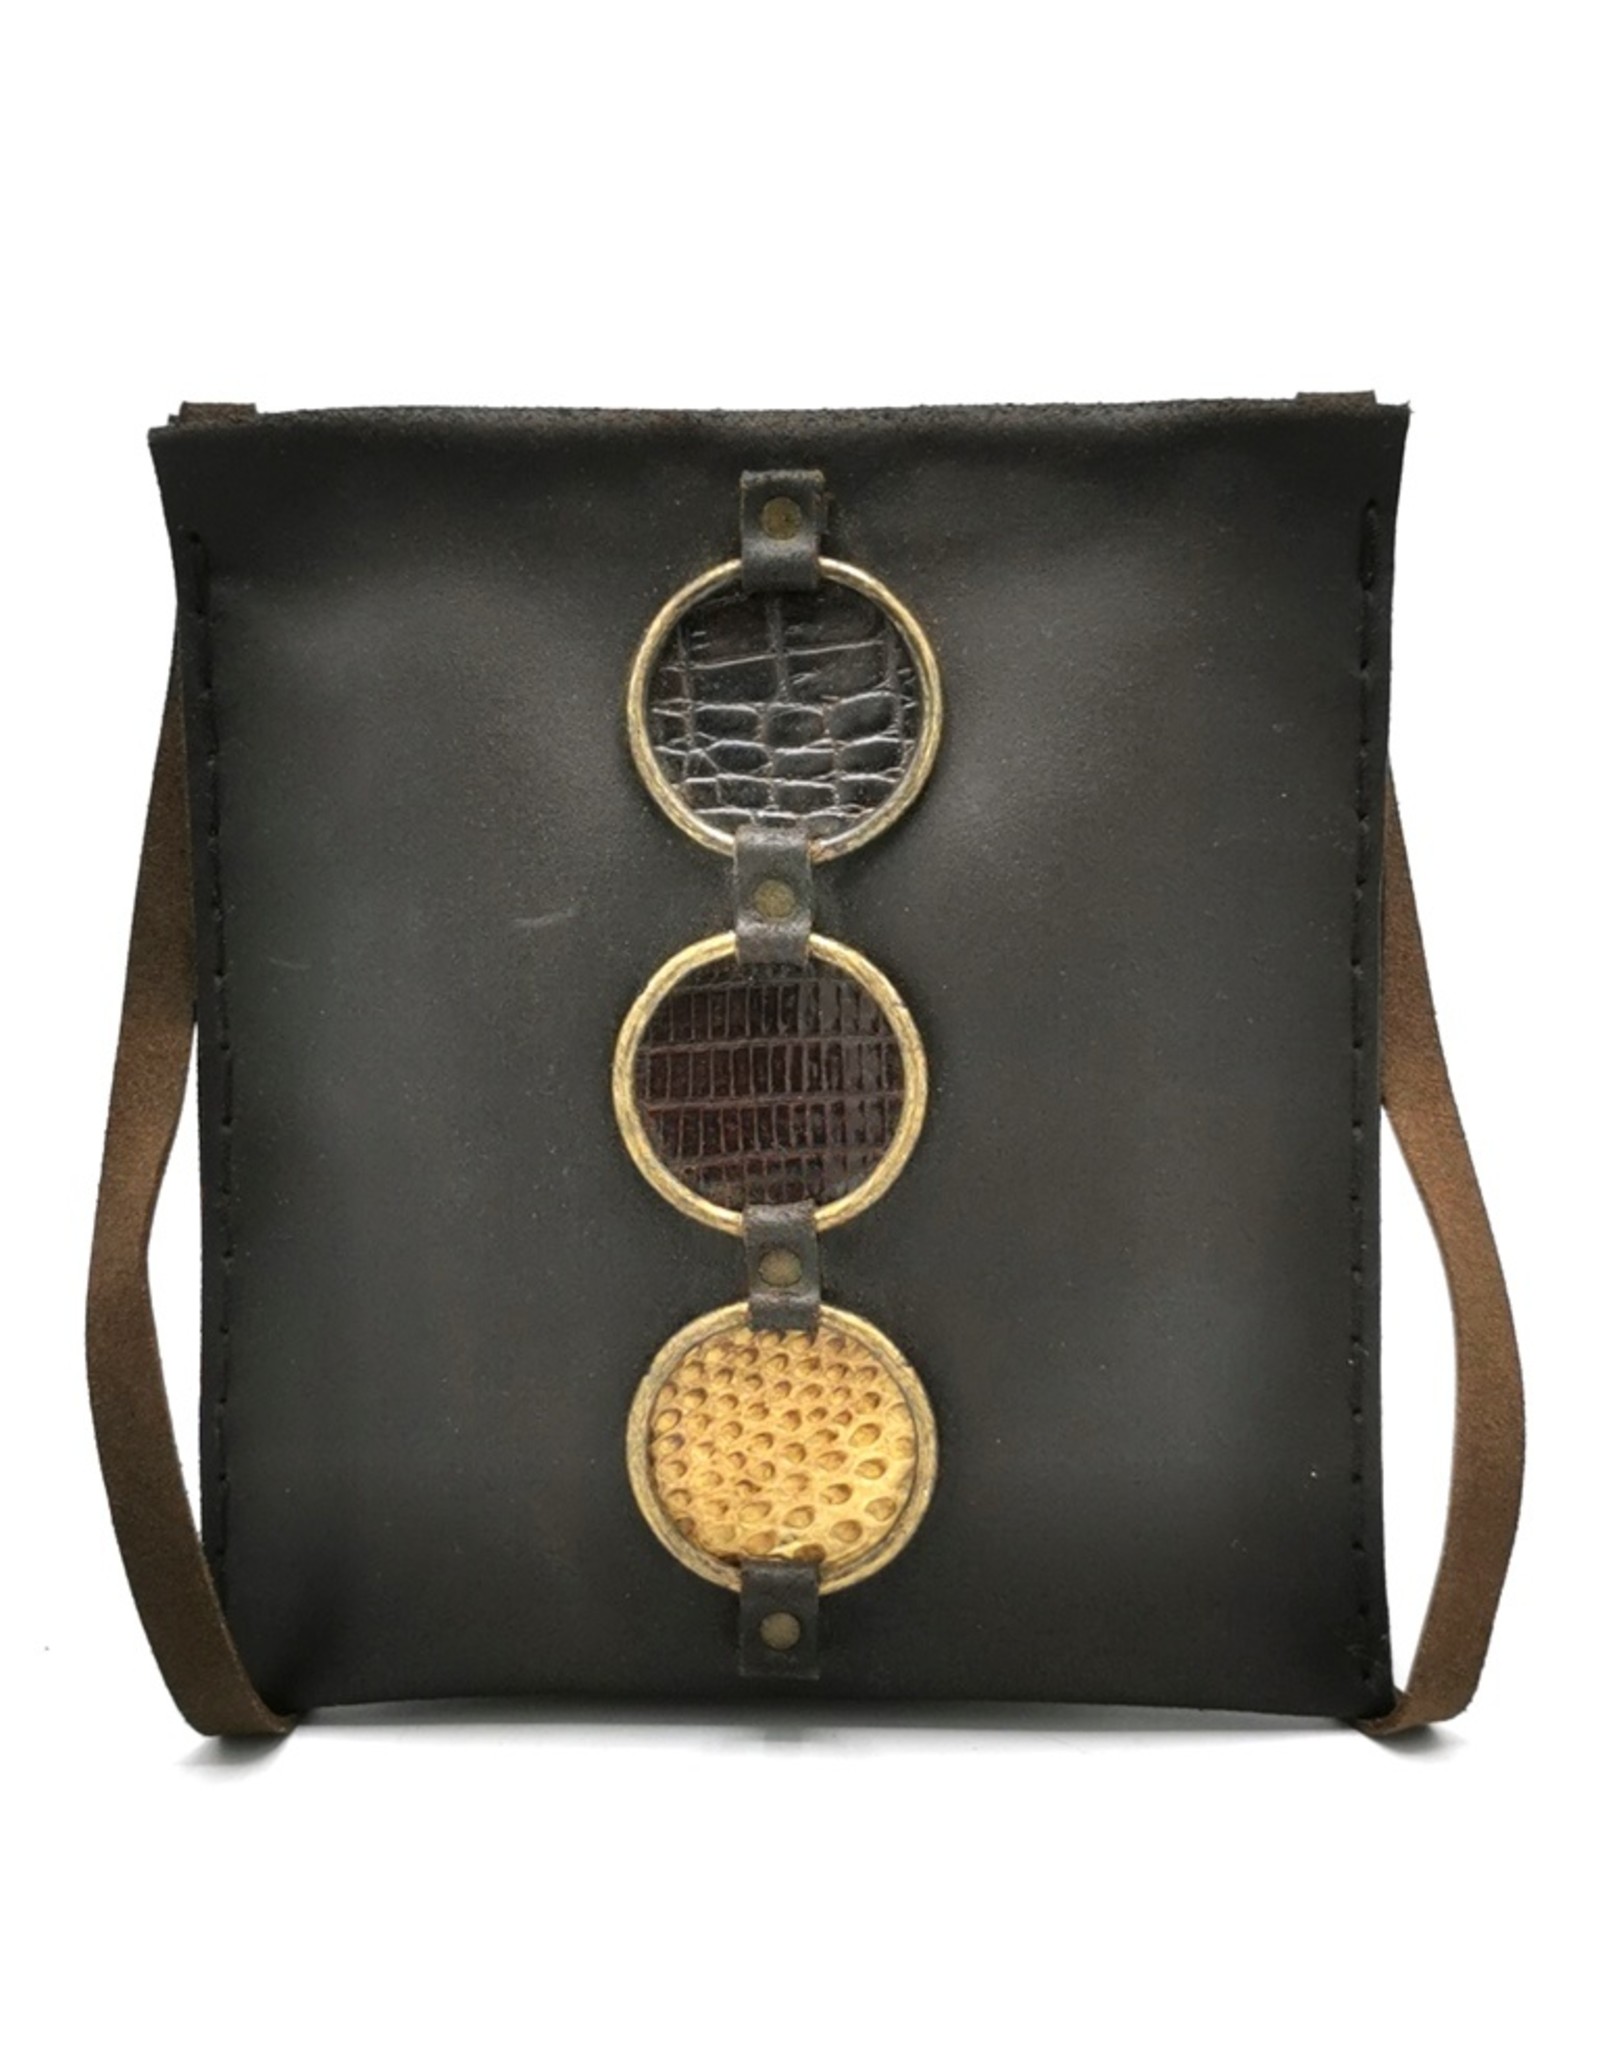 Antonio Duran Leather bags - Leather Shoulder bag Handmade Antonio Duran Design